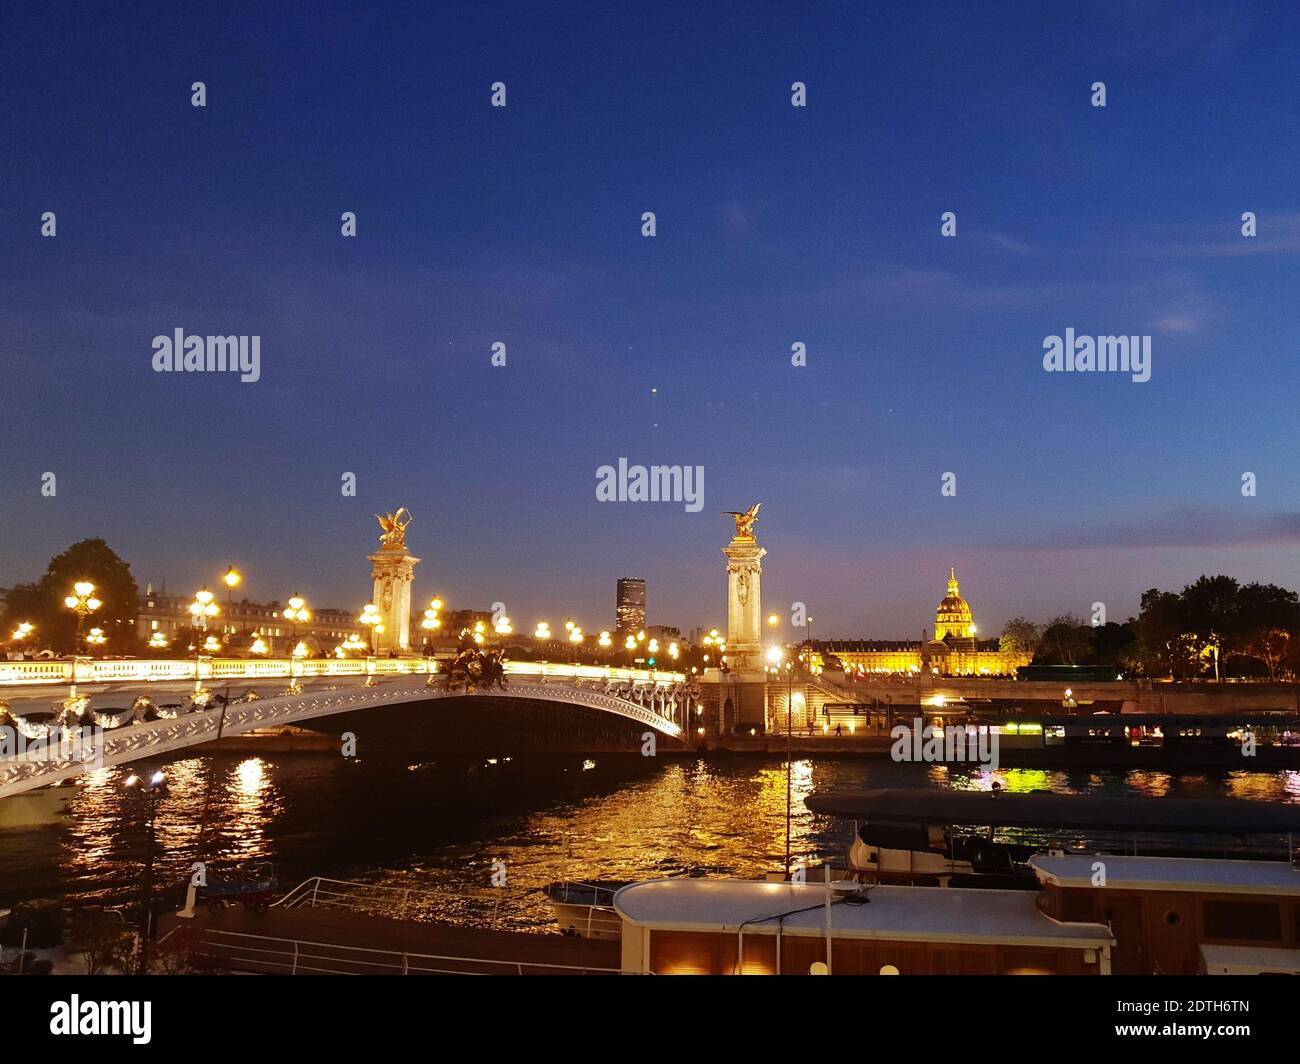 Illuminated Bridge Over River Against Sky In City At Night Stock Photo